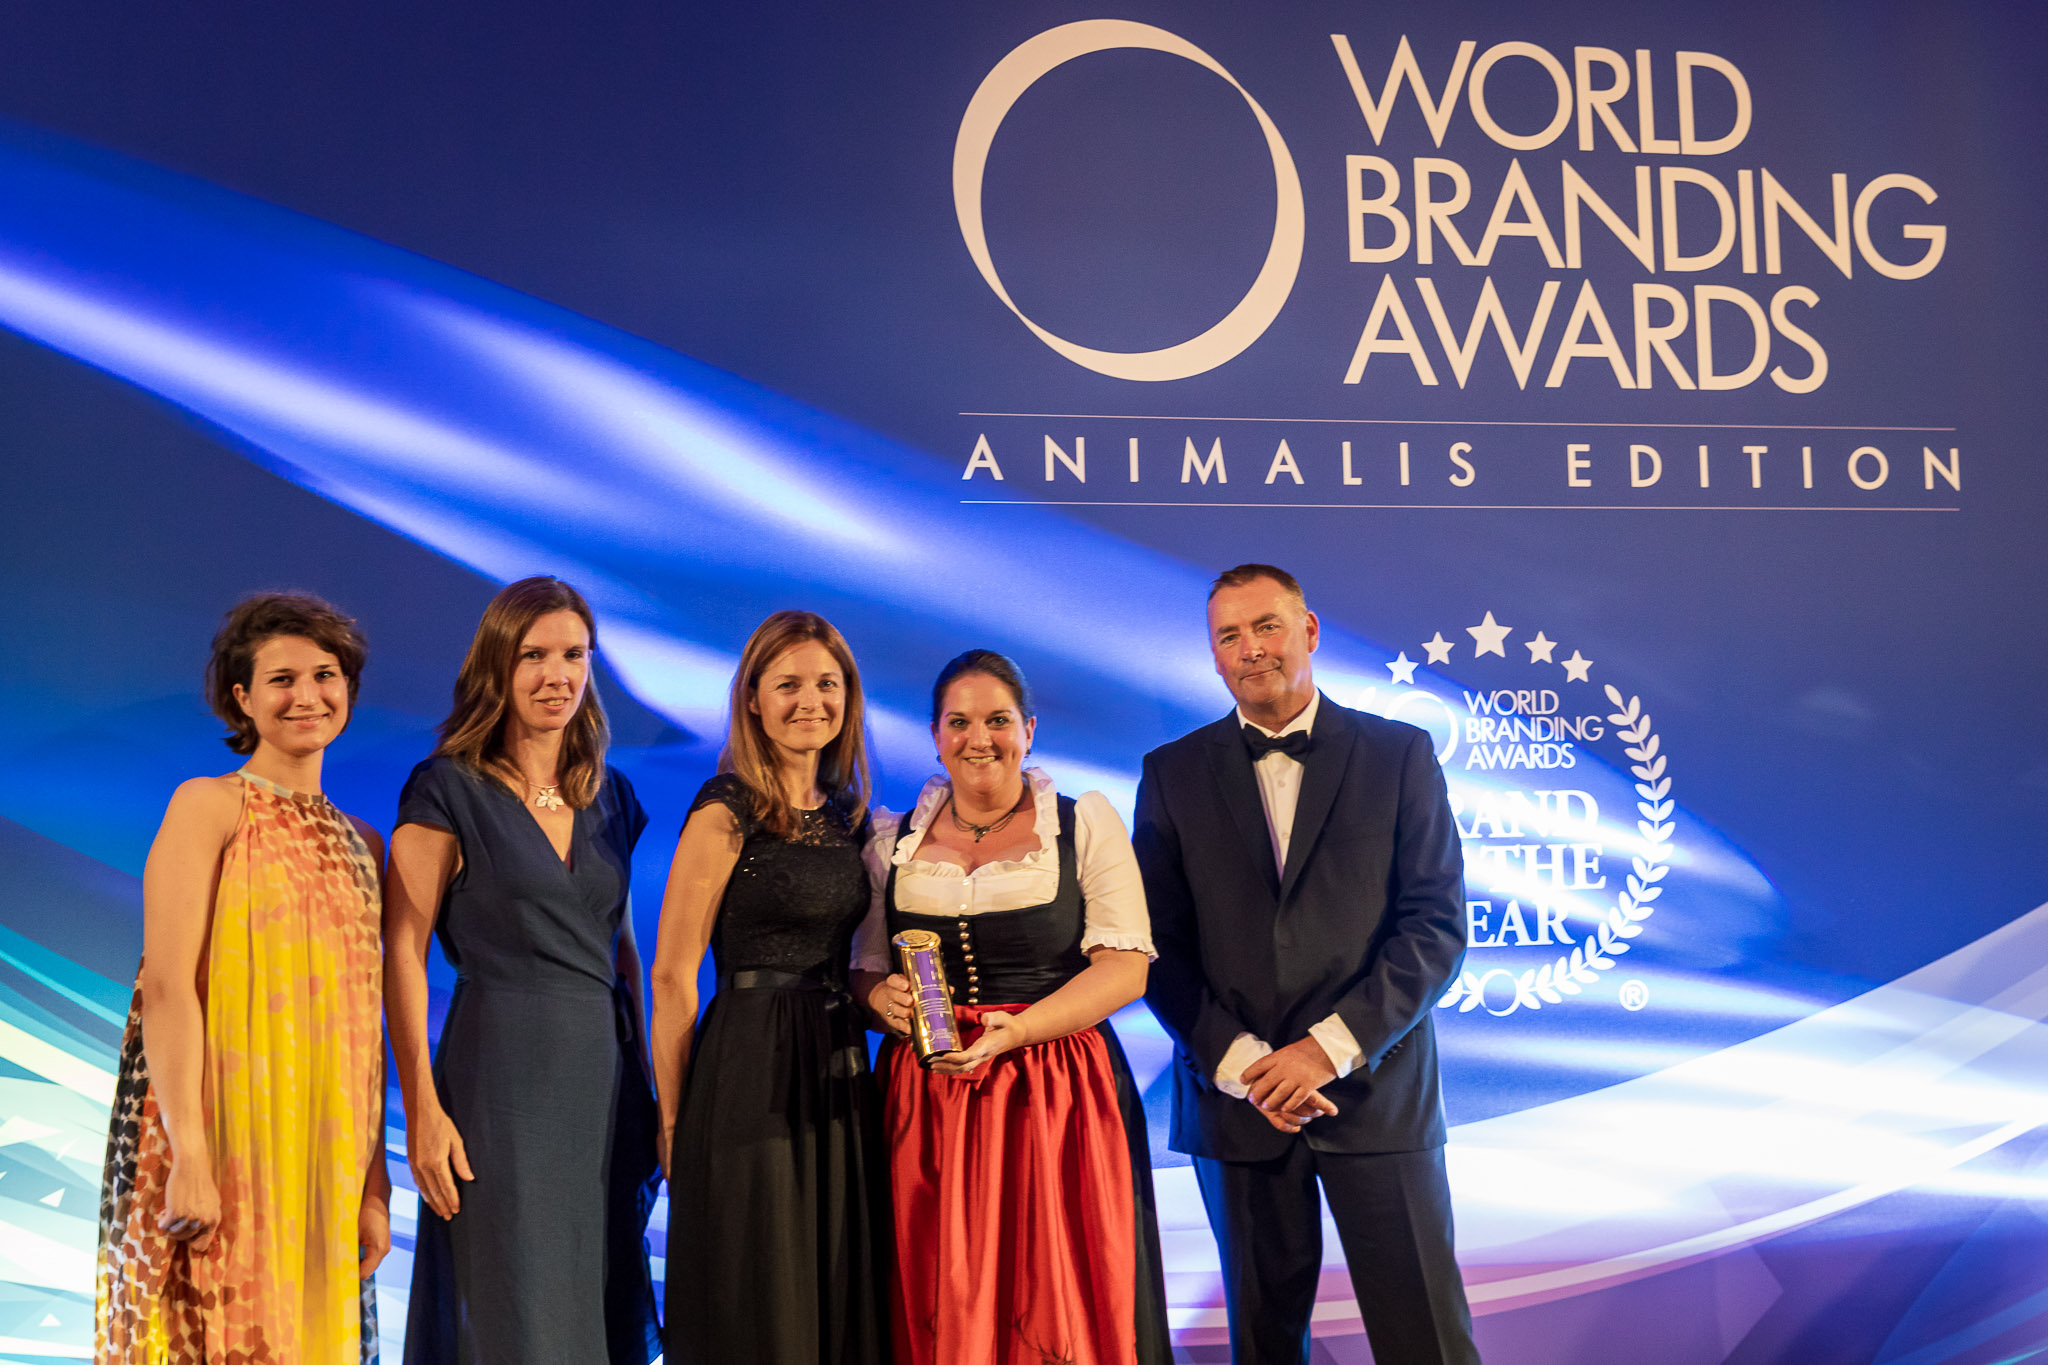 20190703_223635_world_branding_awards_animalis_5940